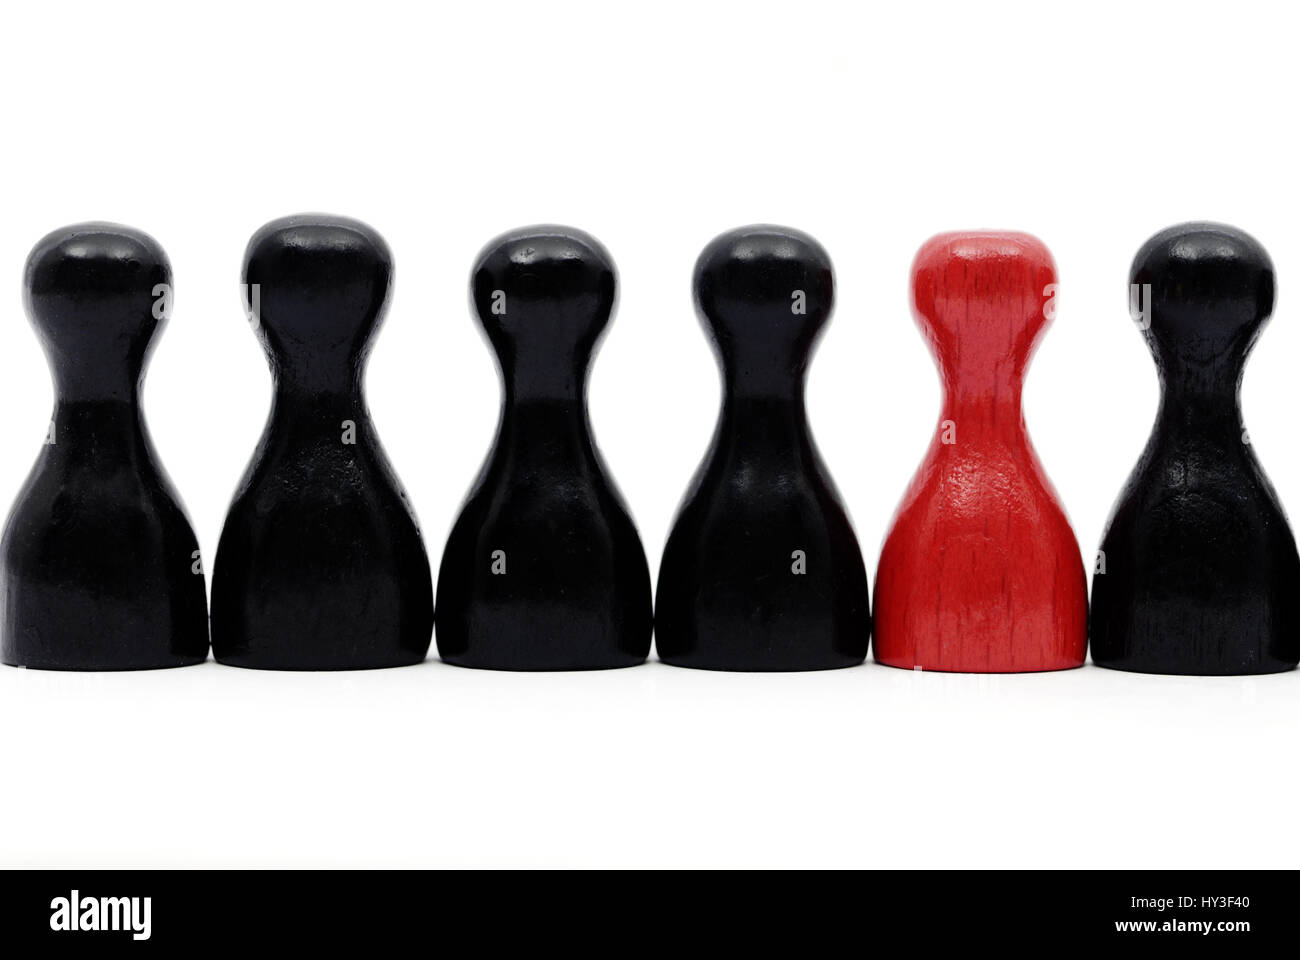 Gioco rosso figura nel bel mezzo del gioco nero figure, Rote Spielfigur inmitten von schwarzen Spielfiguren Foto Stock